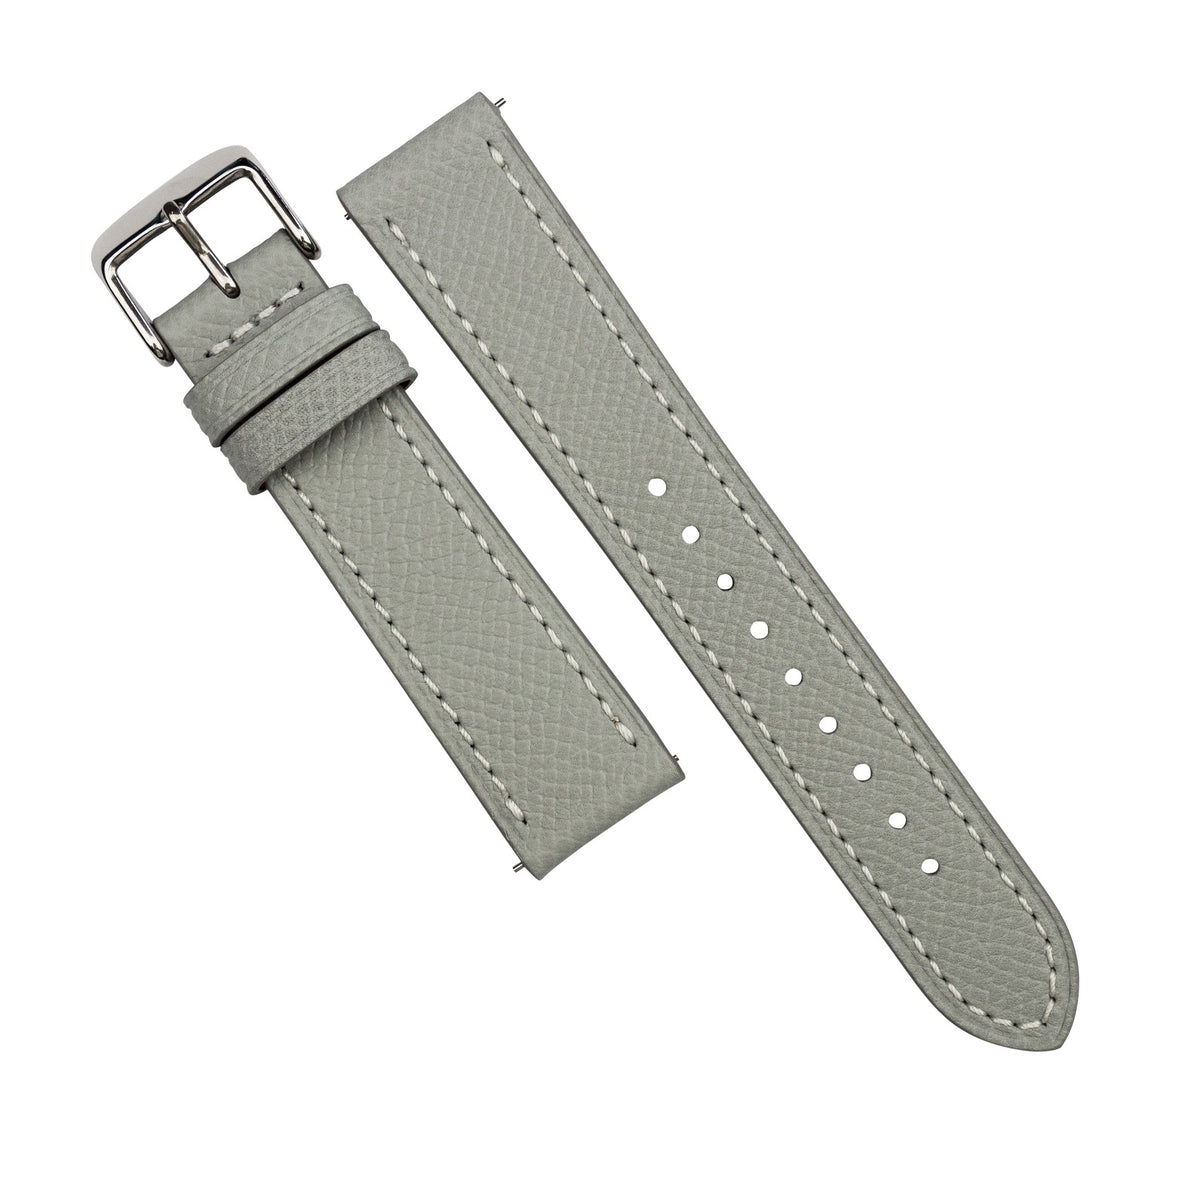 Emery Dress Epsom Leather Strap in Grey w/ White Stitching (19mm) - Nomad Watch Works SG